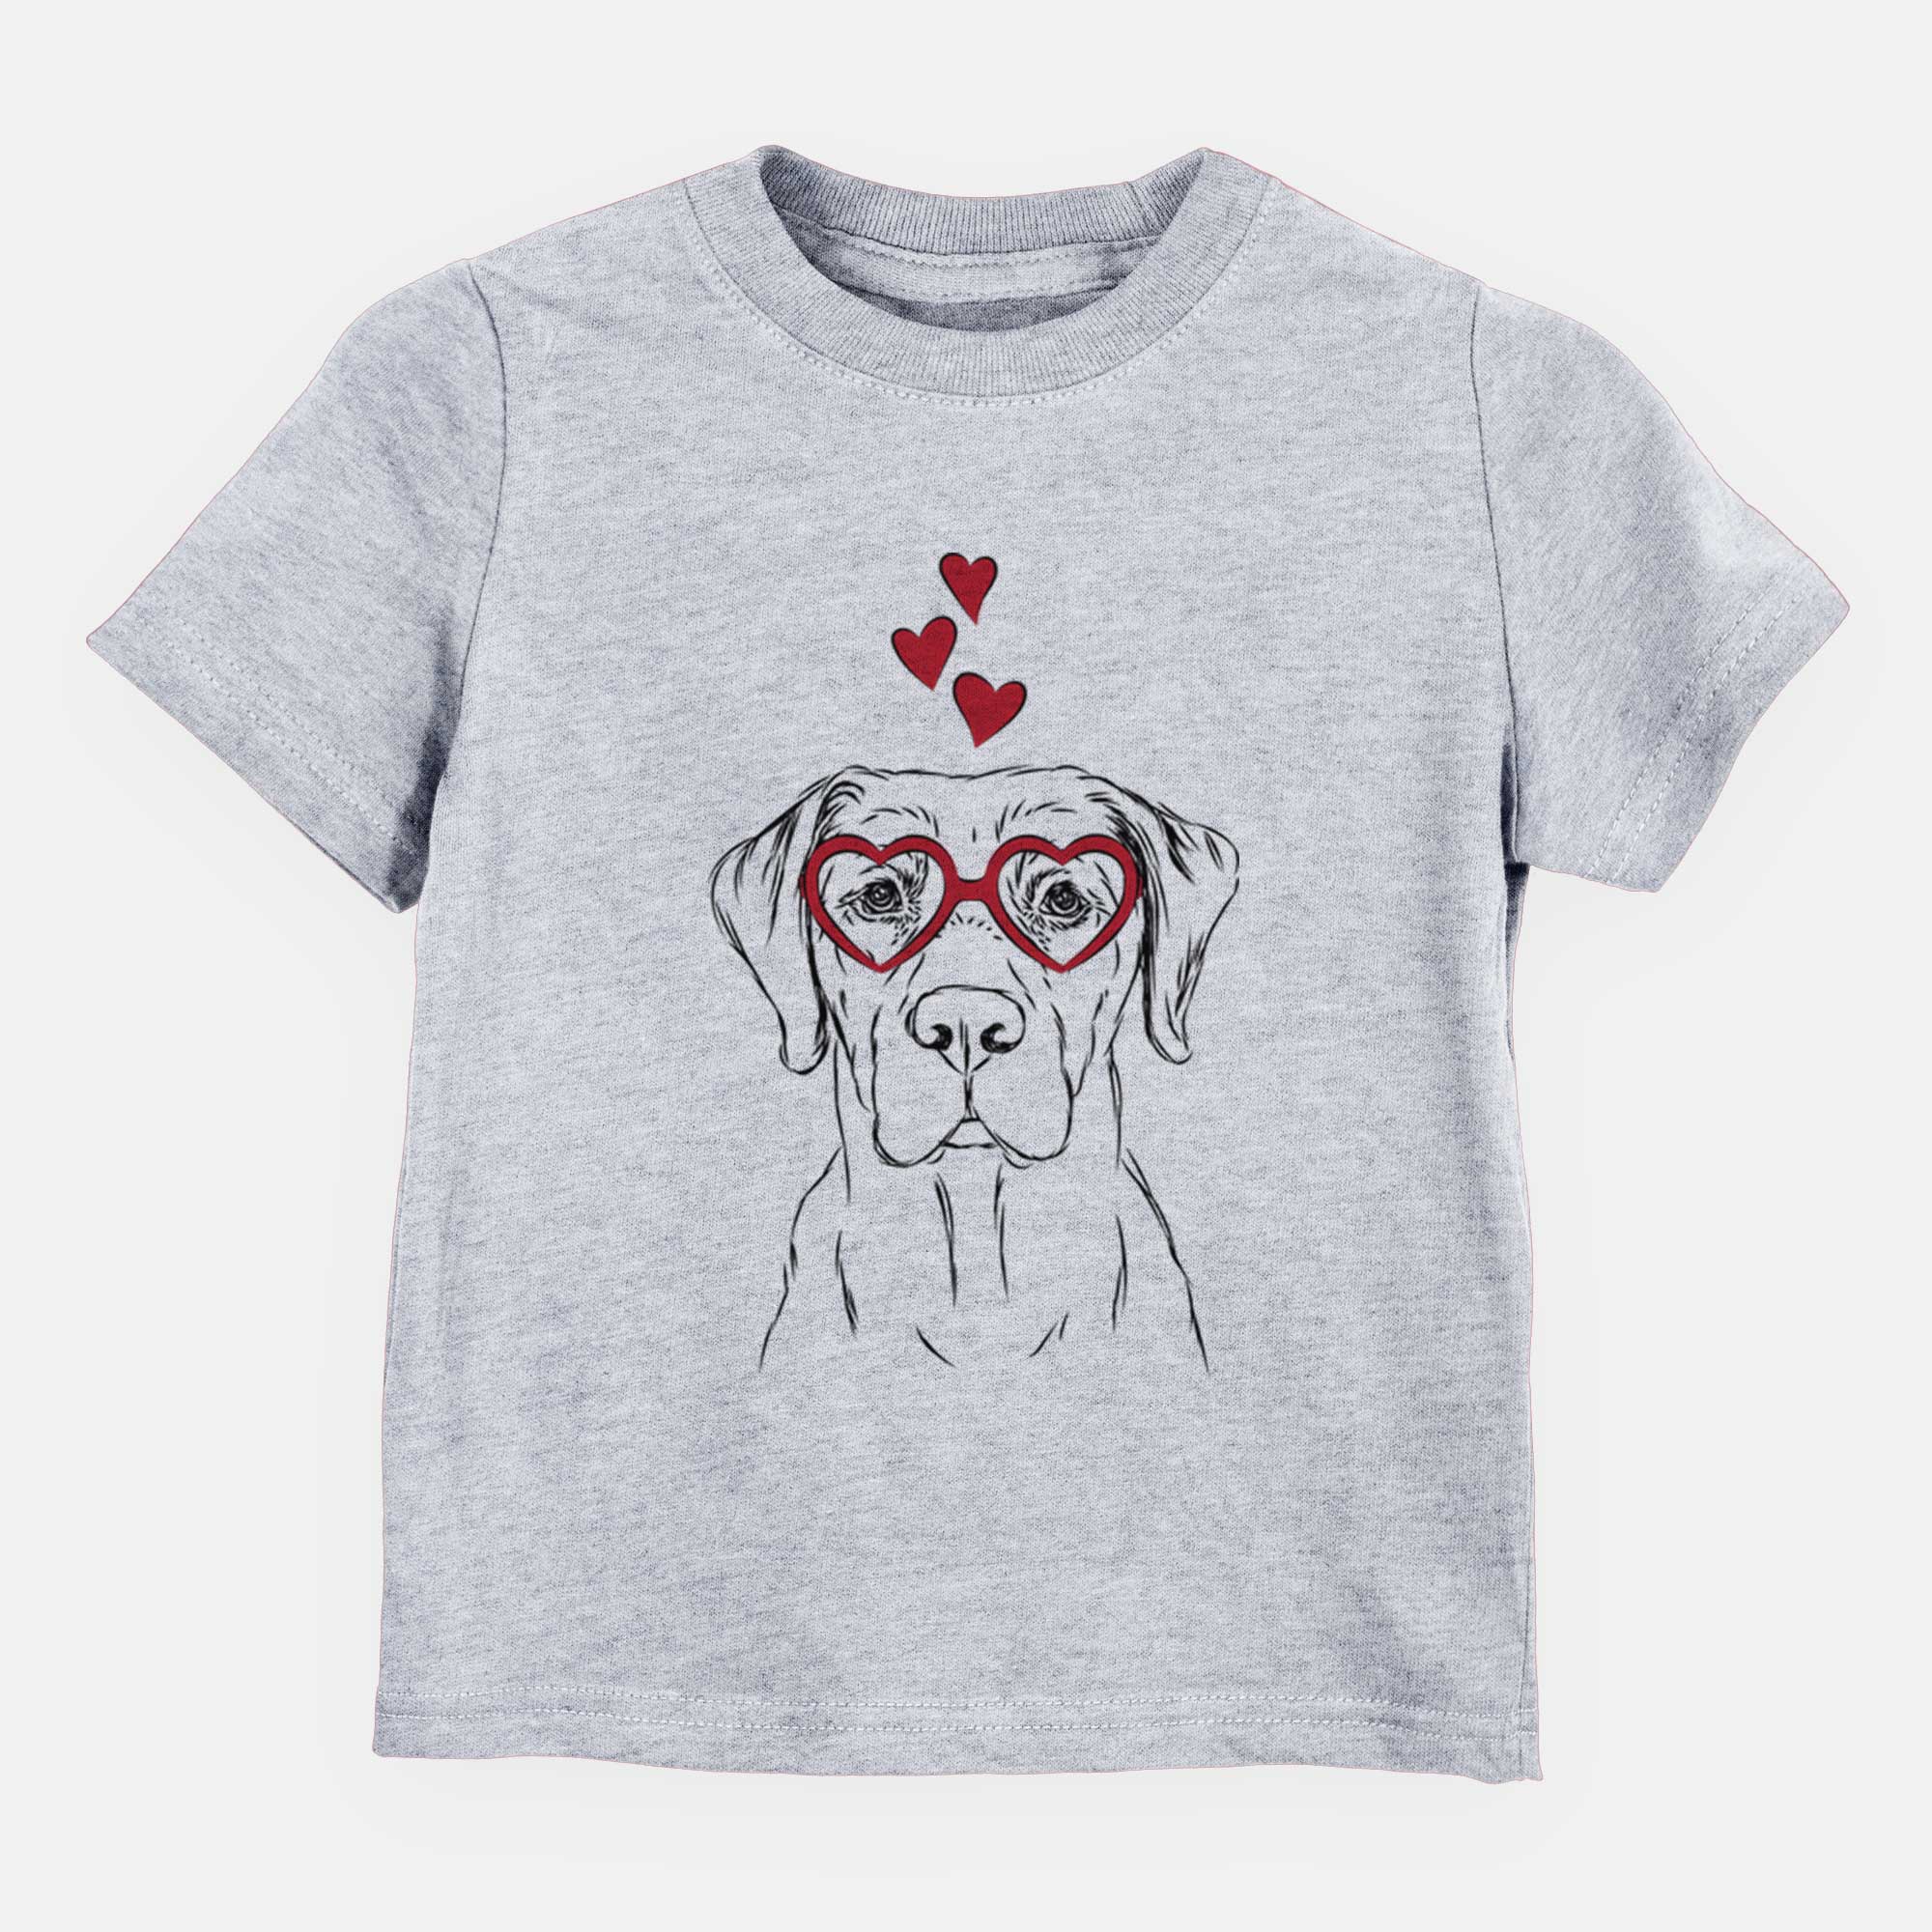 Valentine Rowdy the Labrador Retriever - Kids/Youth/Toddler Shirt